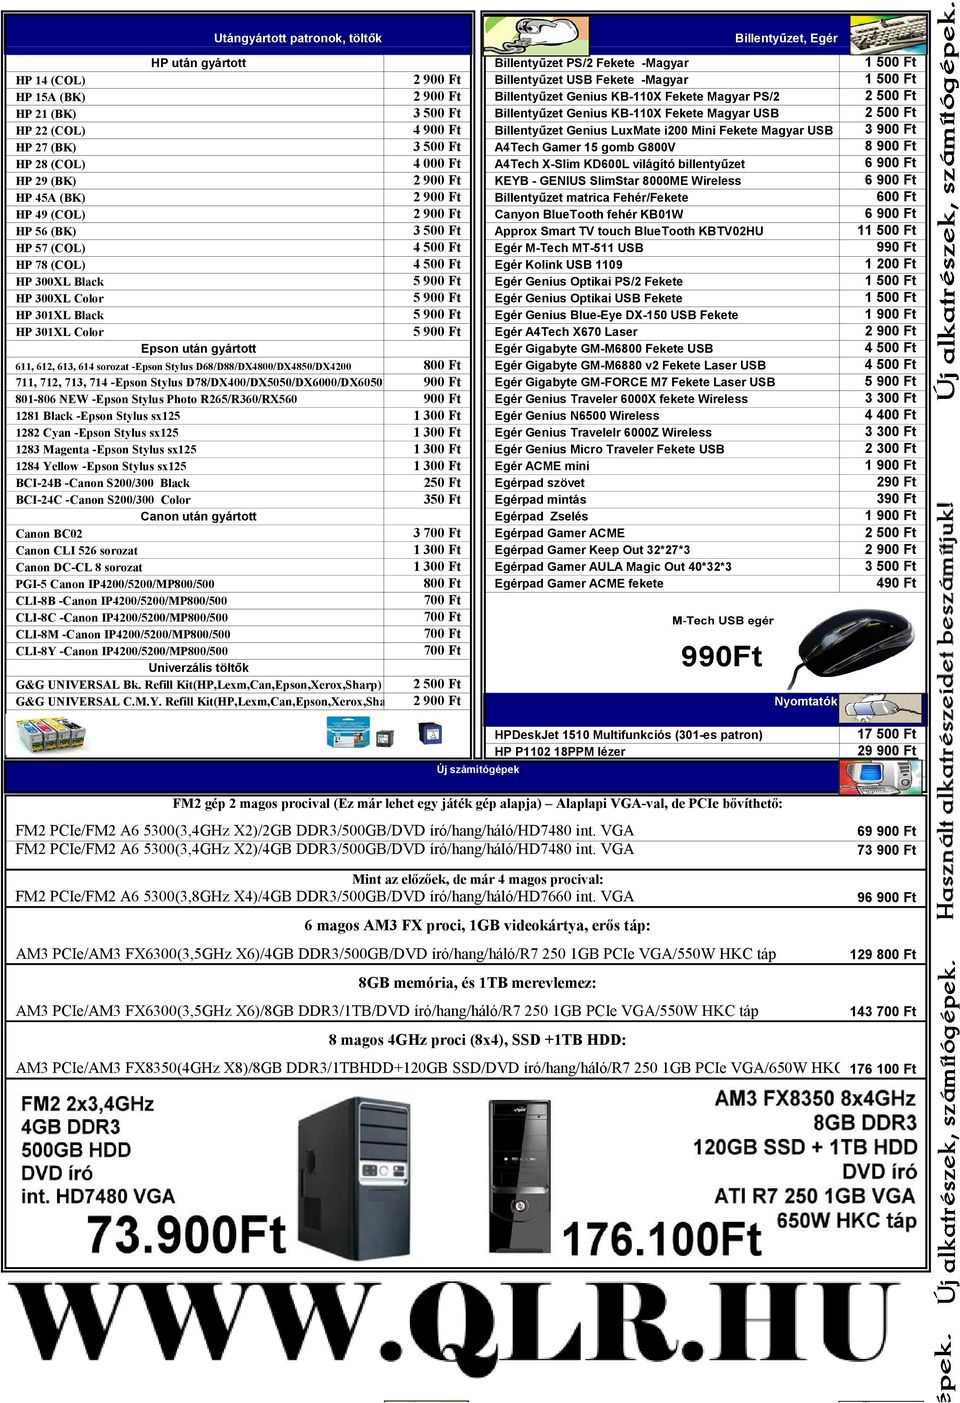 X-Slim KD600L világító billentyűzet HP 29 (BK) KEYB - GENIUS SlimStar 8000ME Wireless HP 45A (BK) Billentyűzet matrica Fehér/Fekete 600 Ft HP 49 (COL) Canyon BlueTooth fehér KB01W HP 56 (BK) Approx